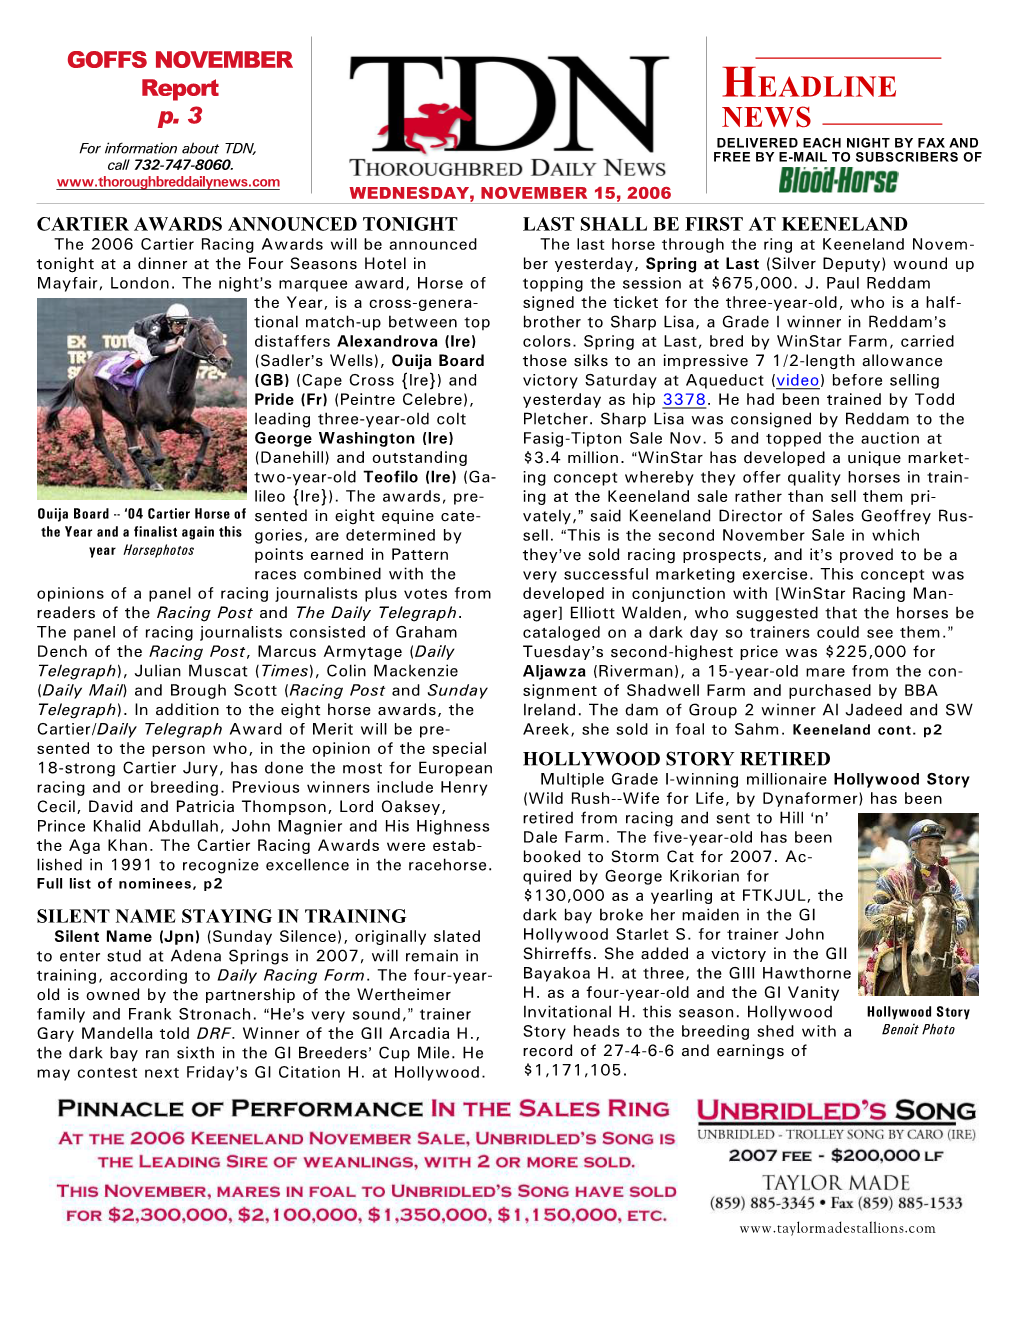 HEADLINE NEWS • 11/15/06 • PAGE 2 of 5